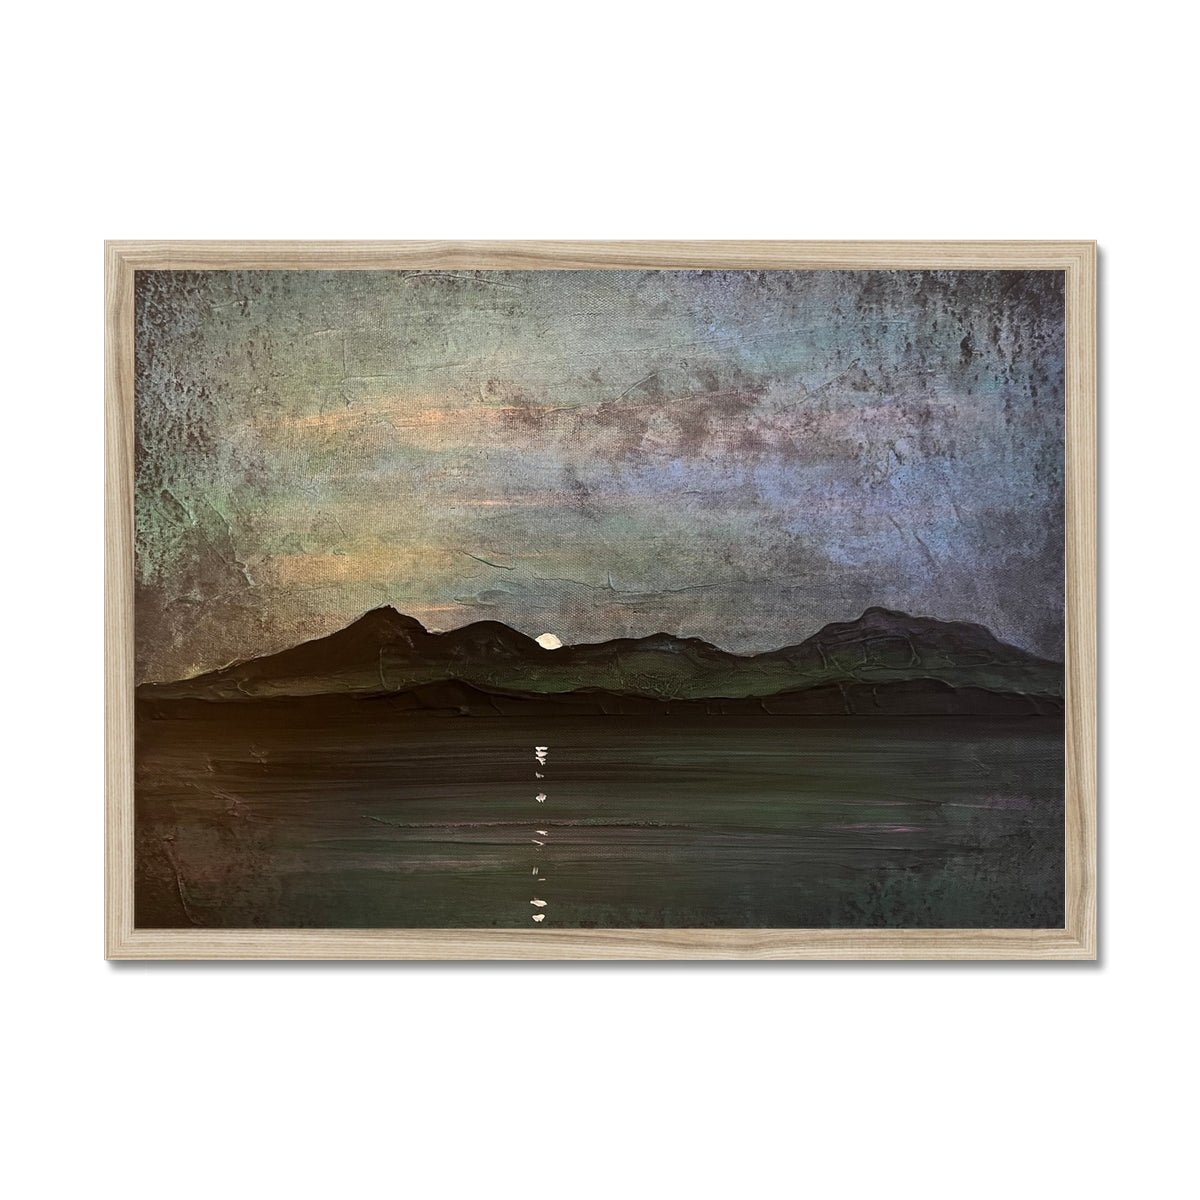 Sleeping Warrior Moonlight Arran Painting | Framed Prints From Scotland-Framed Prints-Arran Art Gallery-A2 Landscape-Natural Frame-Paintings, Prints, Homeware, Art Gifts From Scotland By Scottish Artist Kevin Hunter